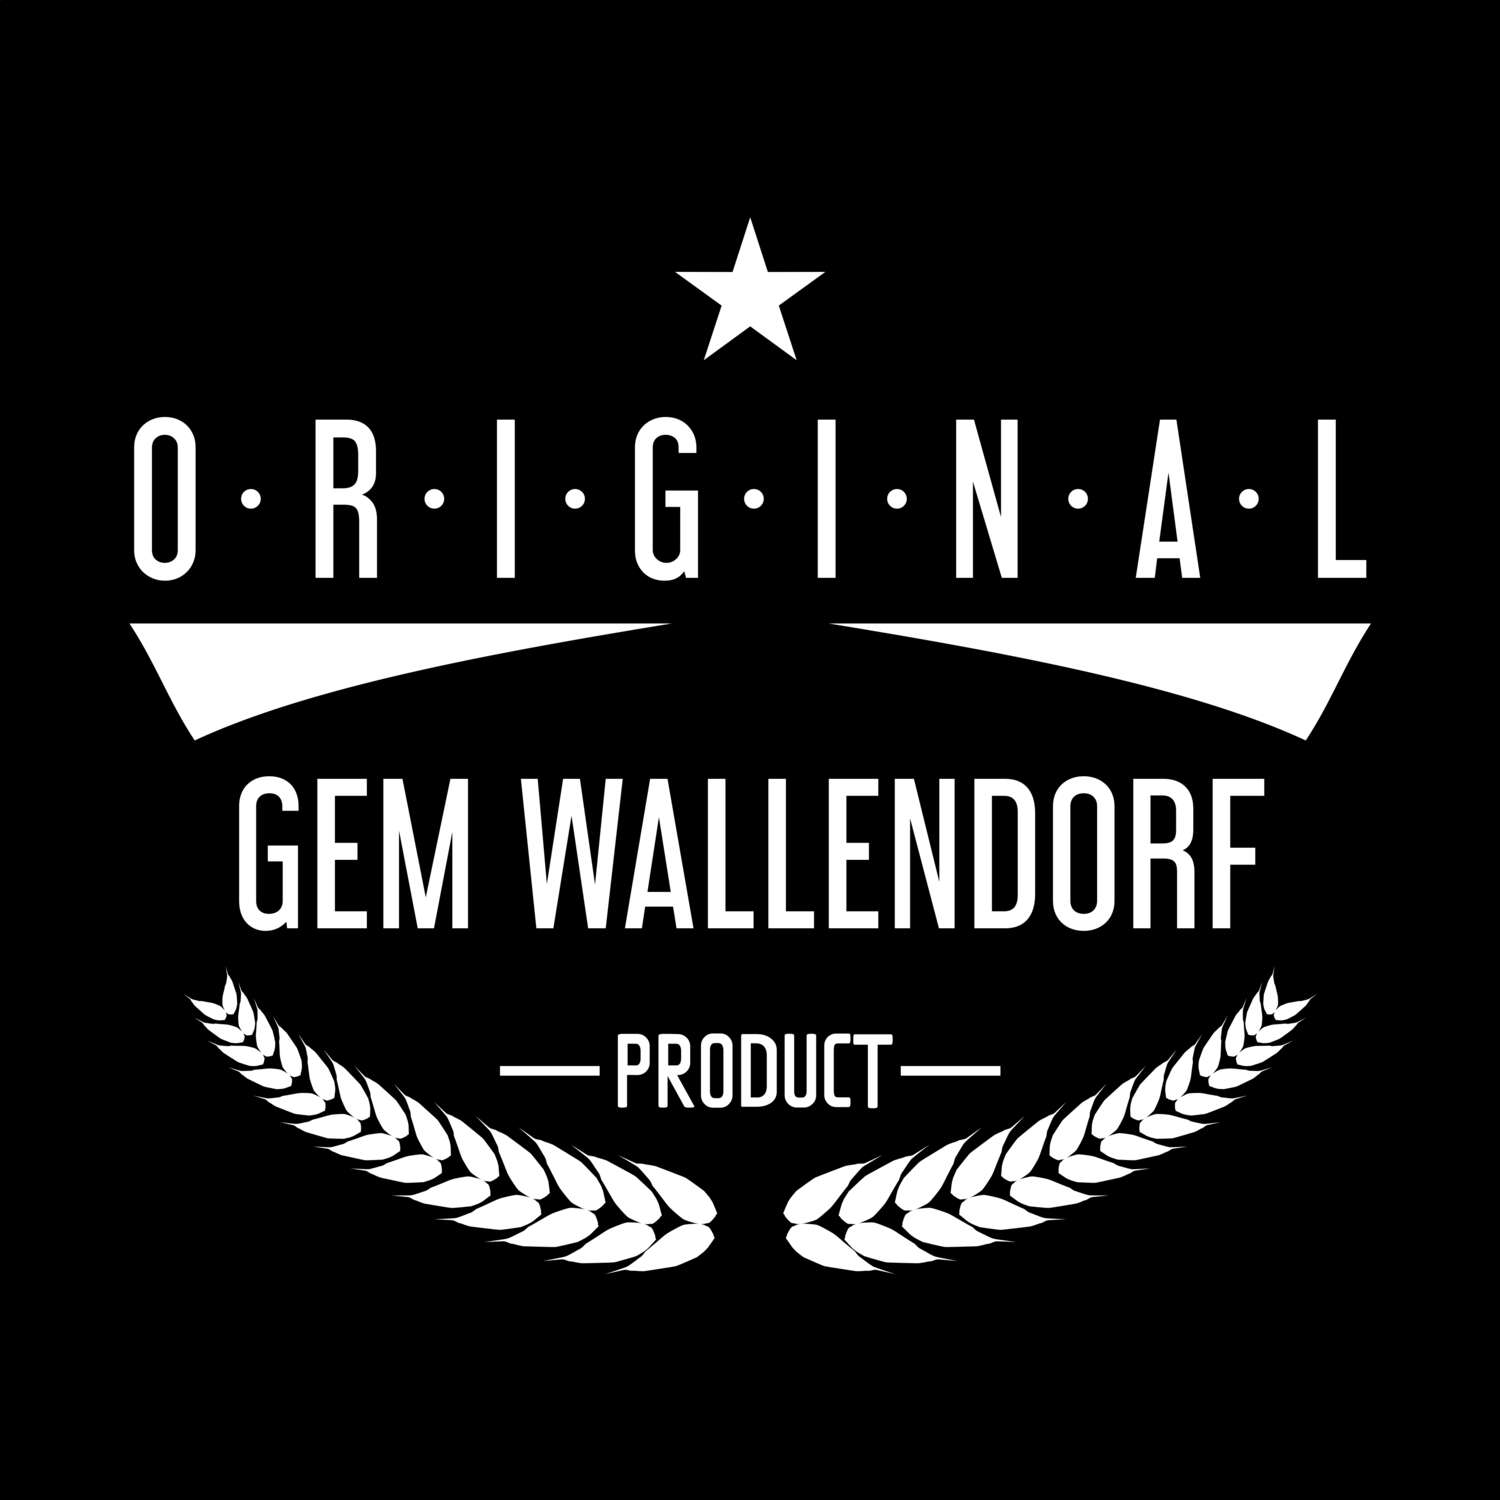 Gem Wallendorf T-Shirt »Original Product«